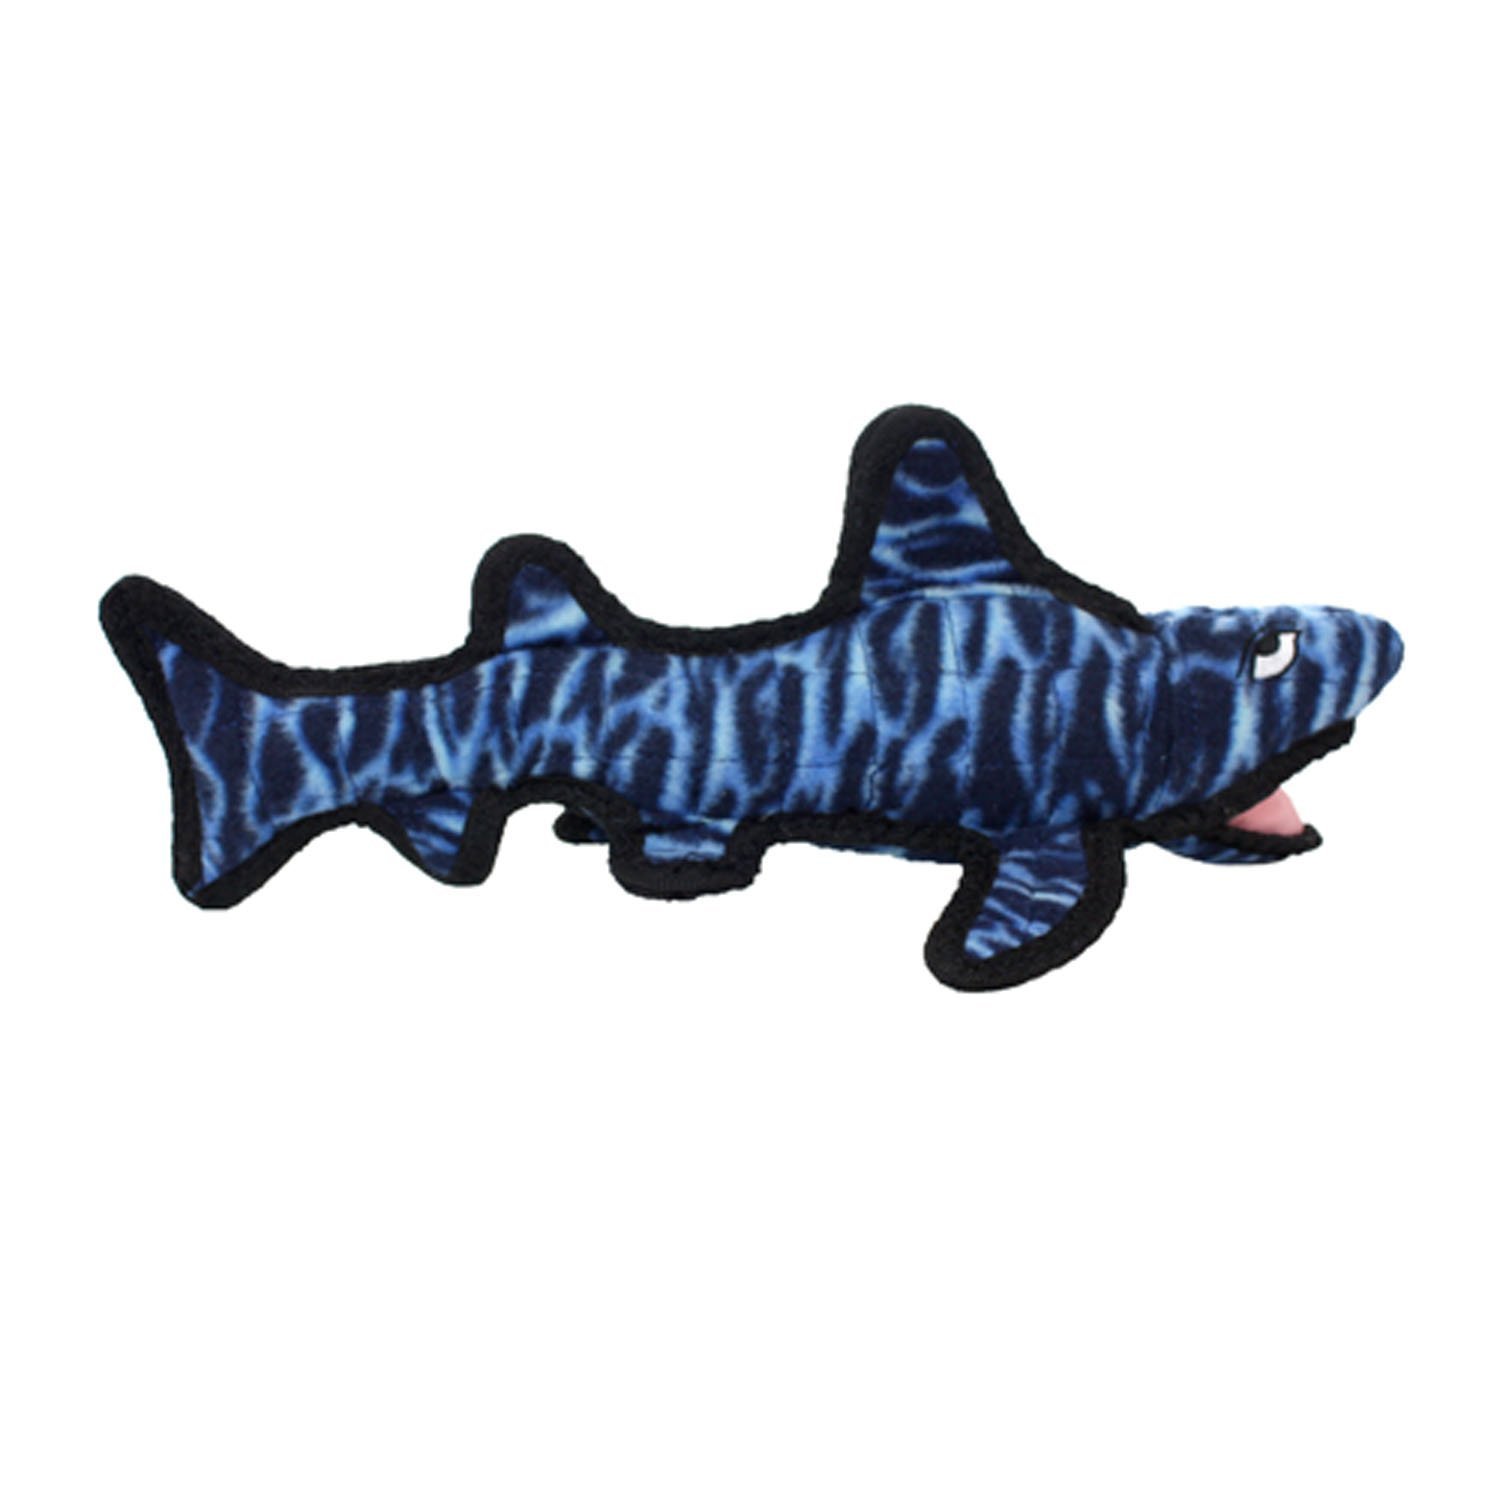 Tuffy Sea Creatures Dog Toy - Shack the Shark image 1